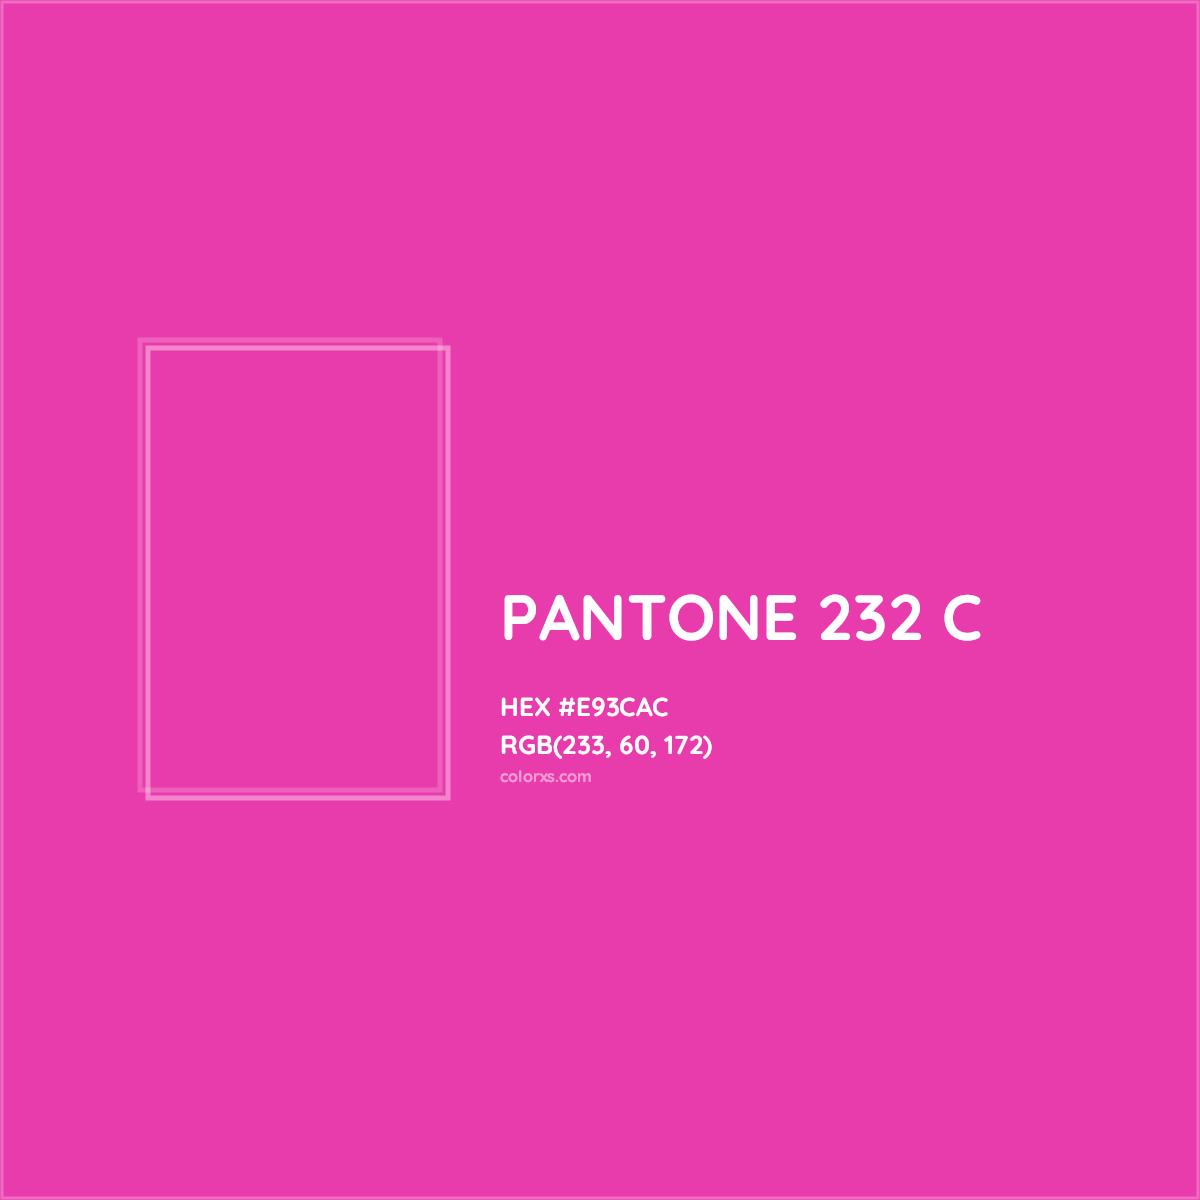 HEX #E93CAC PANTONE 232 C CMS Pantone PMS - Color Code